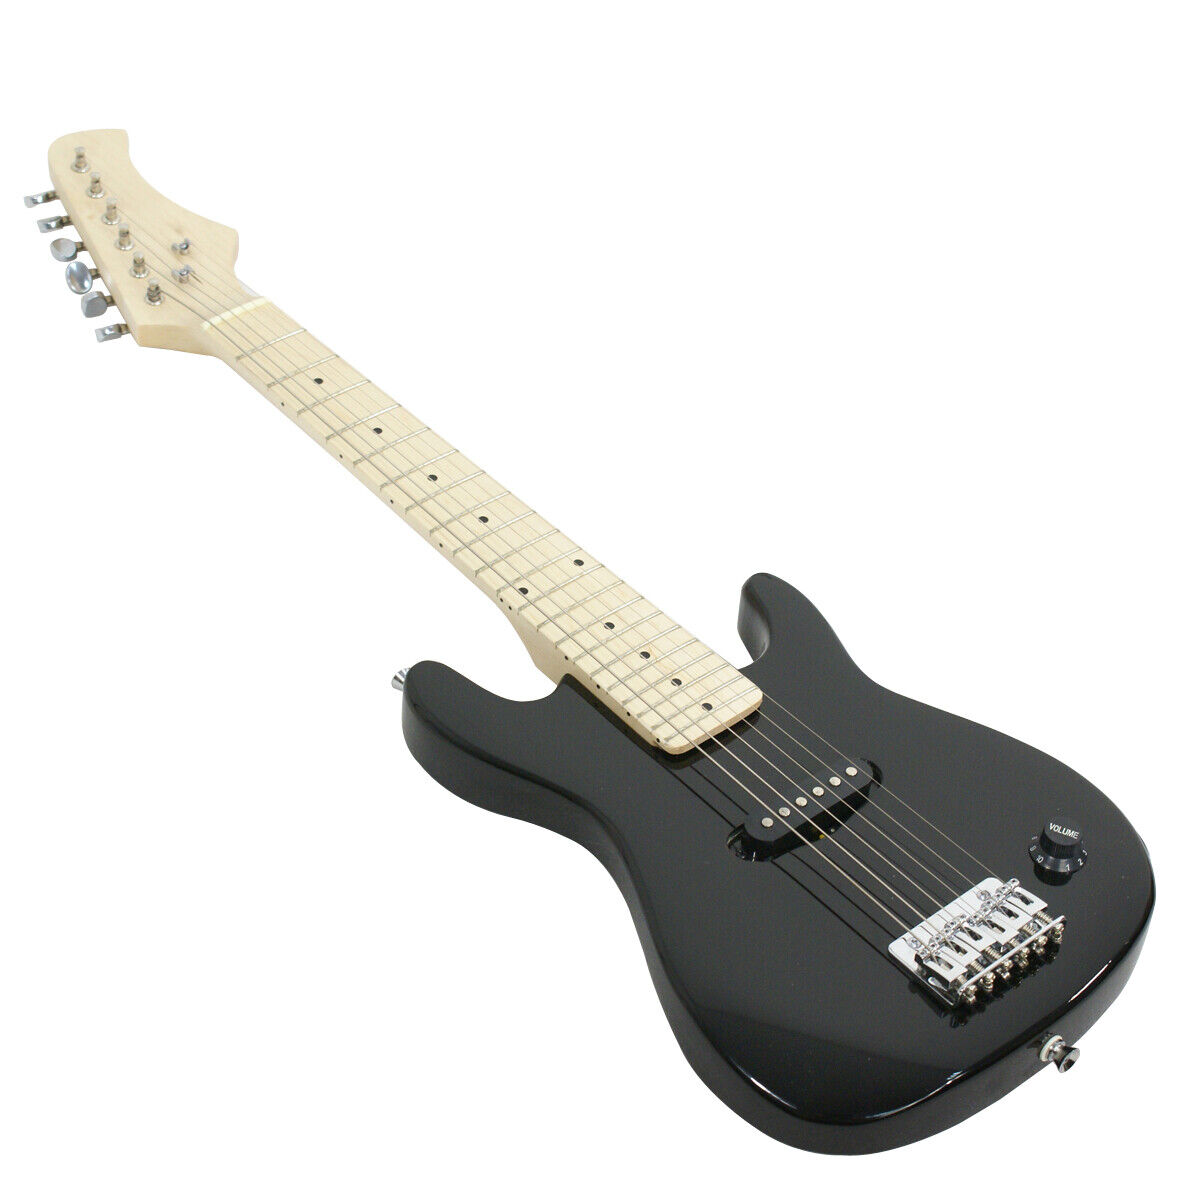 thinkstar Kids 30" Beginner Guitar With Amp Case Electric Guitar Accessories Pack Black